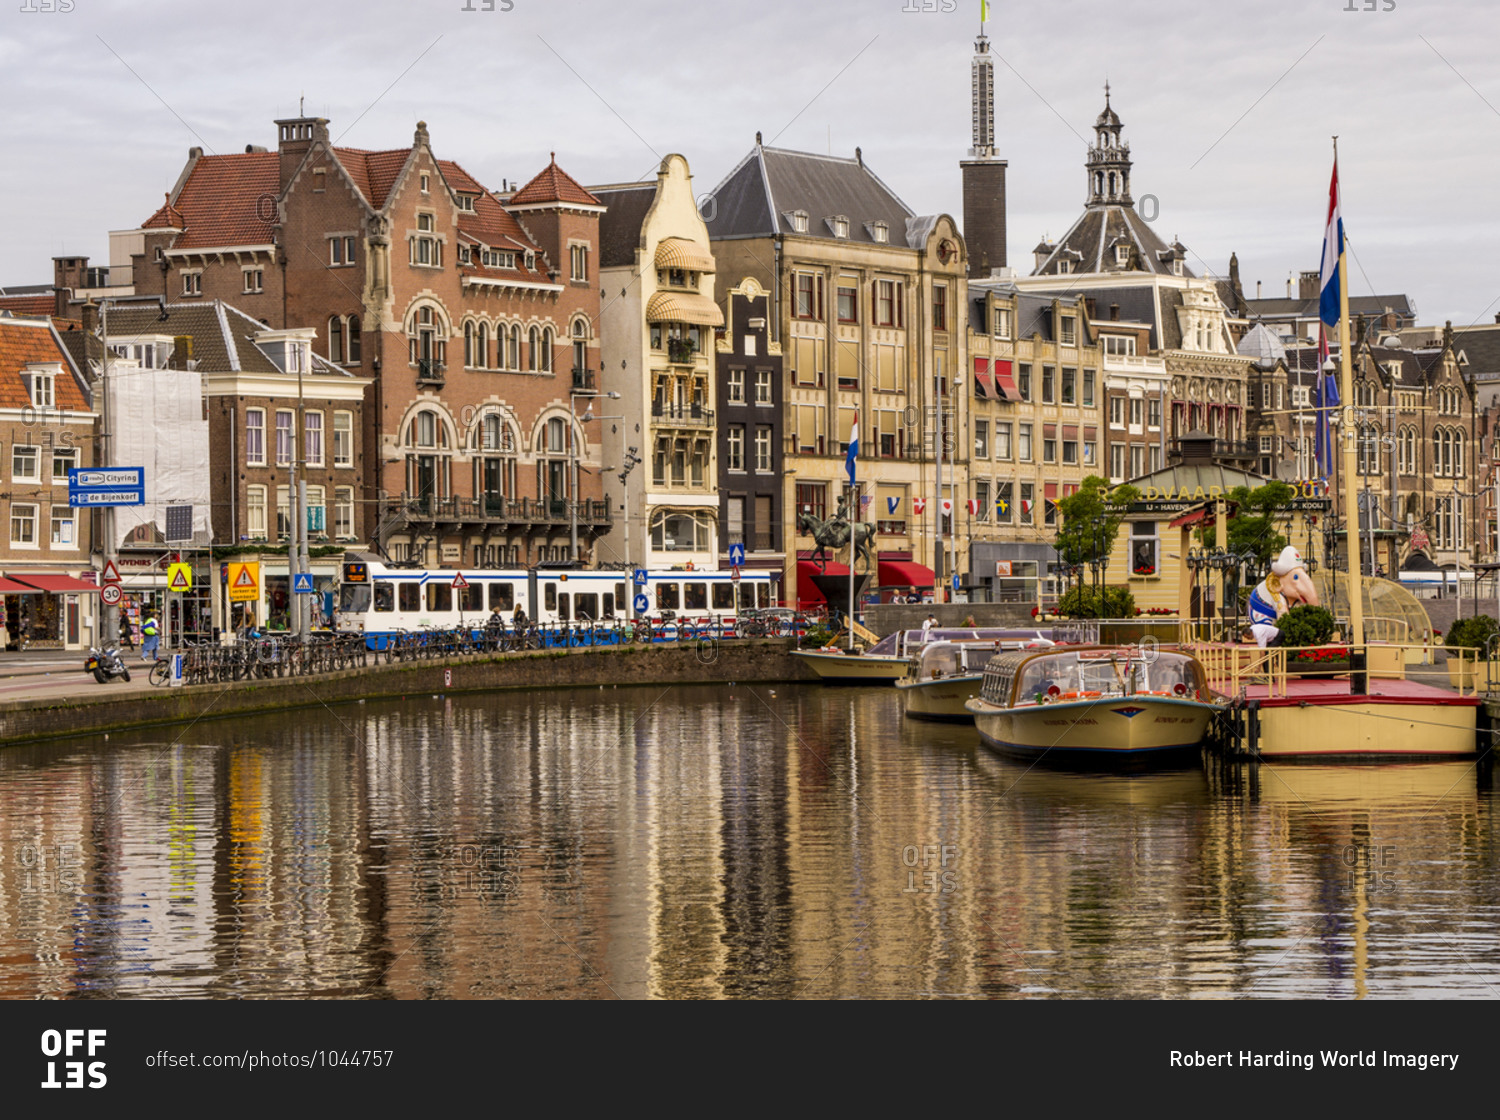 Rokin Canal, Amsterdam, North Holland, Netherlands, Europe